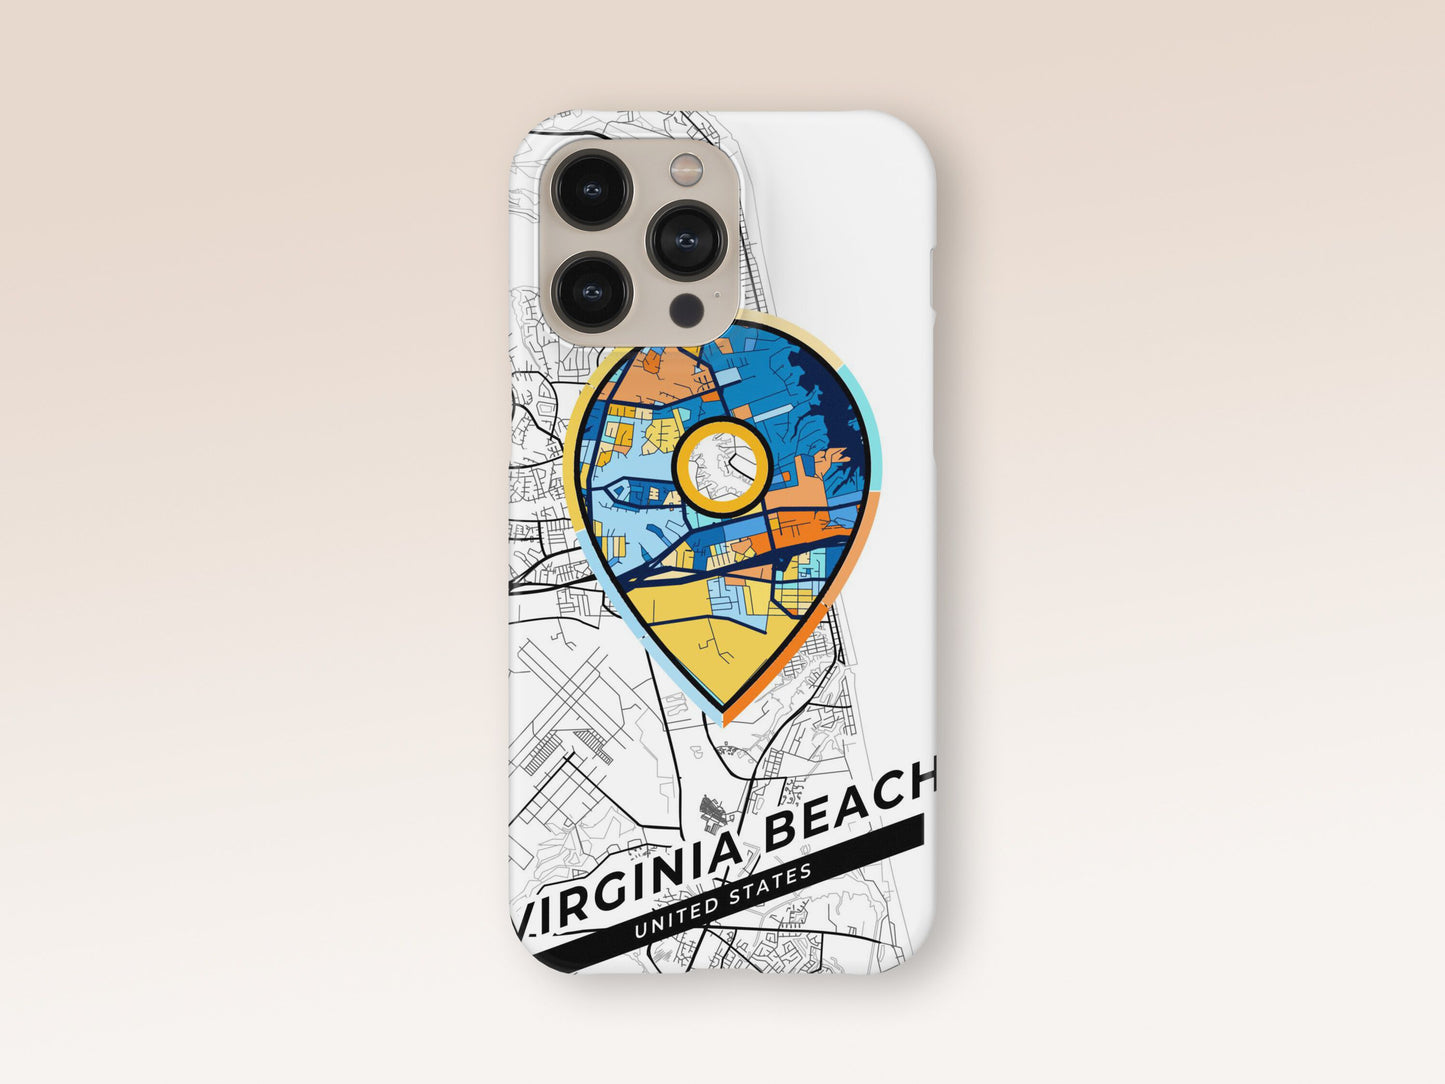 Virginia Beach Virginia slim phone case with colorful icon 1